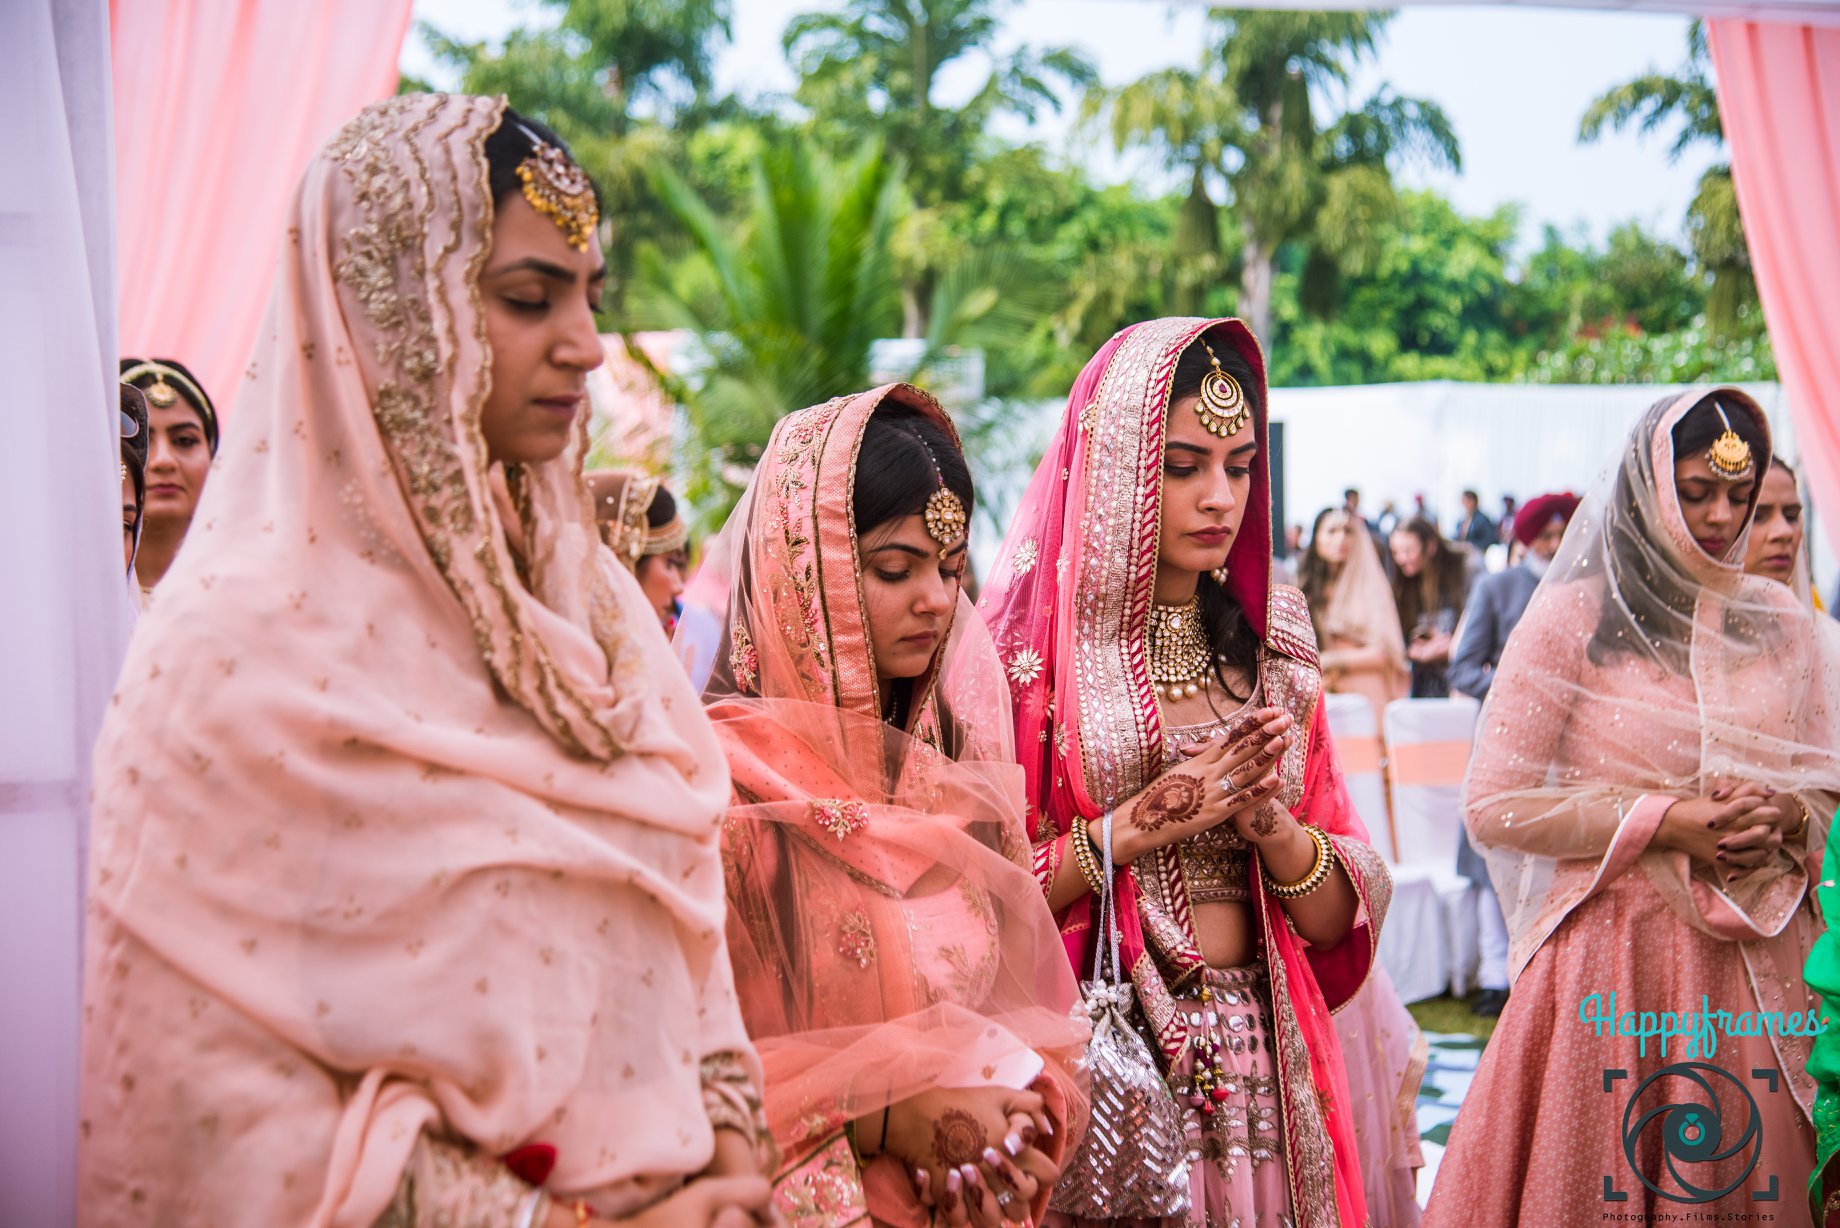 Happyframes  Wedding Photographer, Mumbai